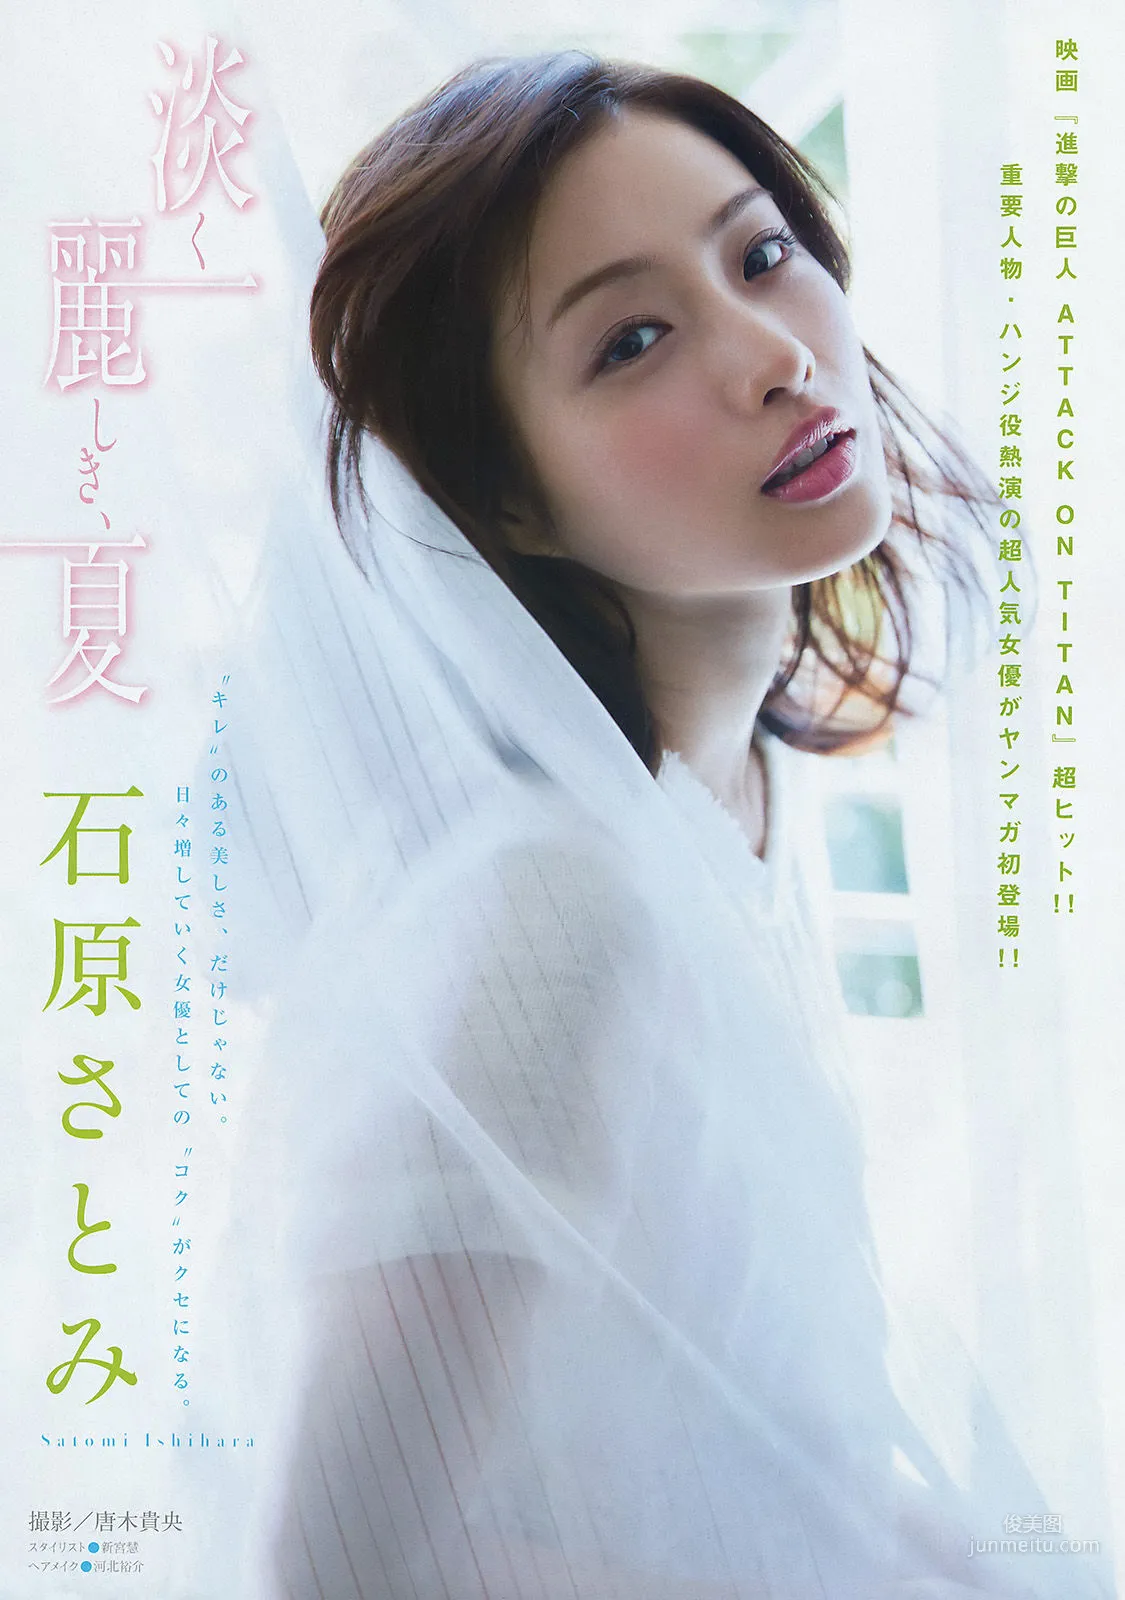 [Young Magazine] 石原さとみ 高崎聖子 2015年No.37-38 写真杂志2